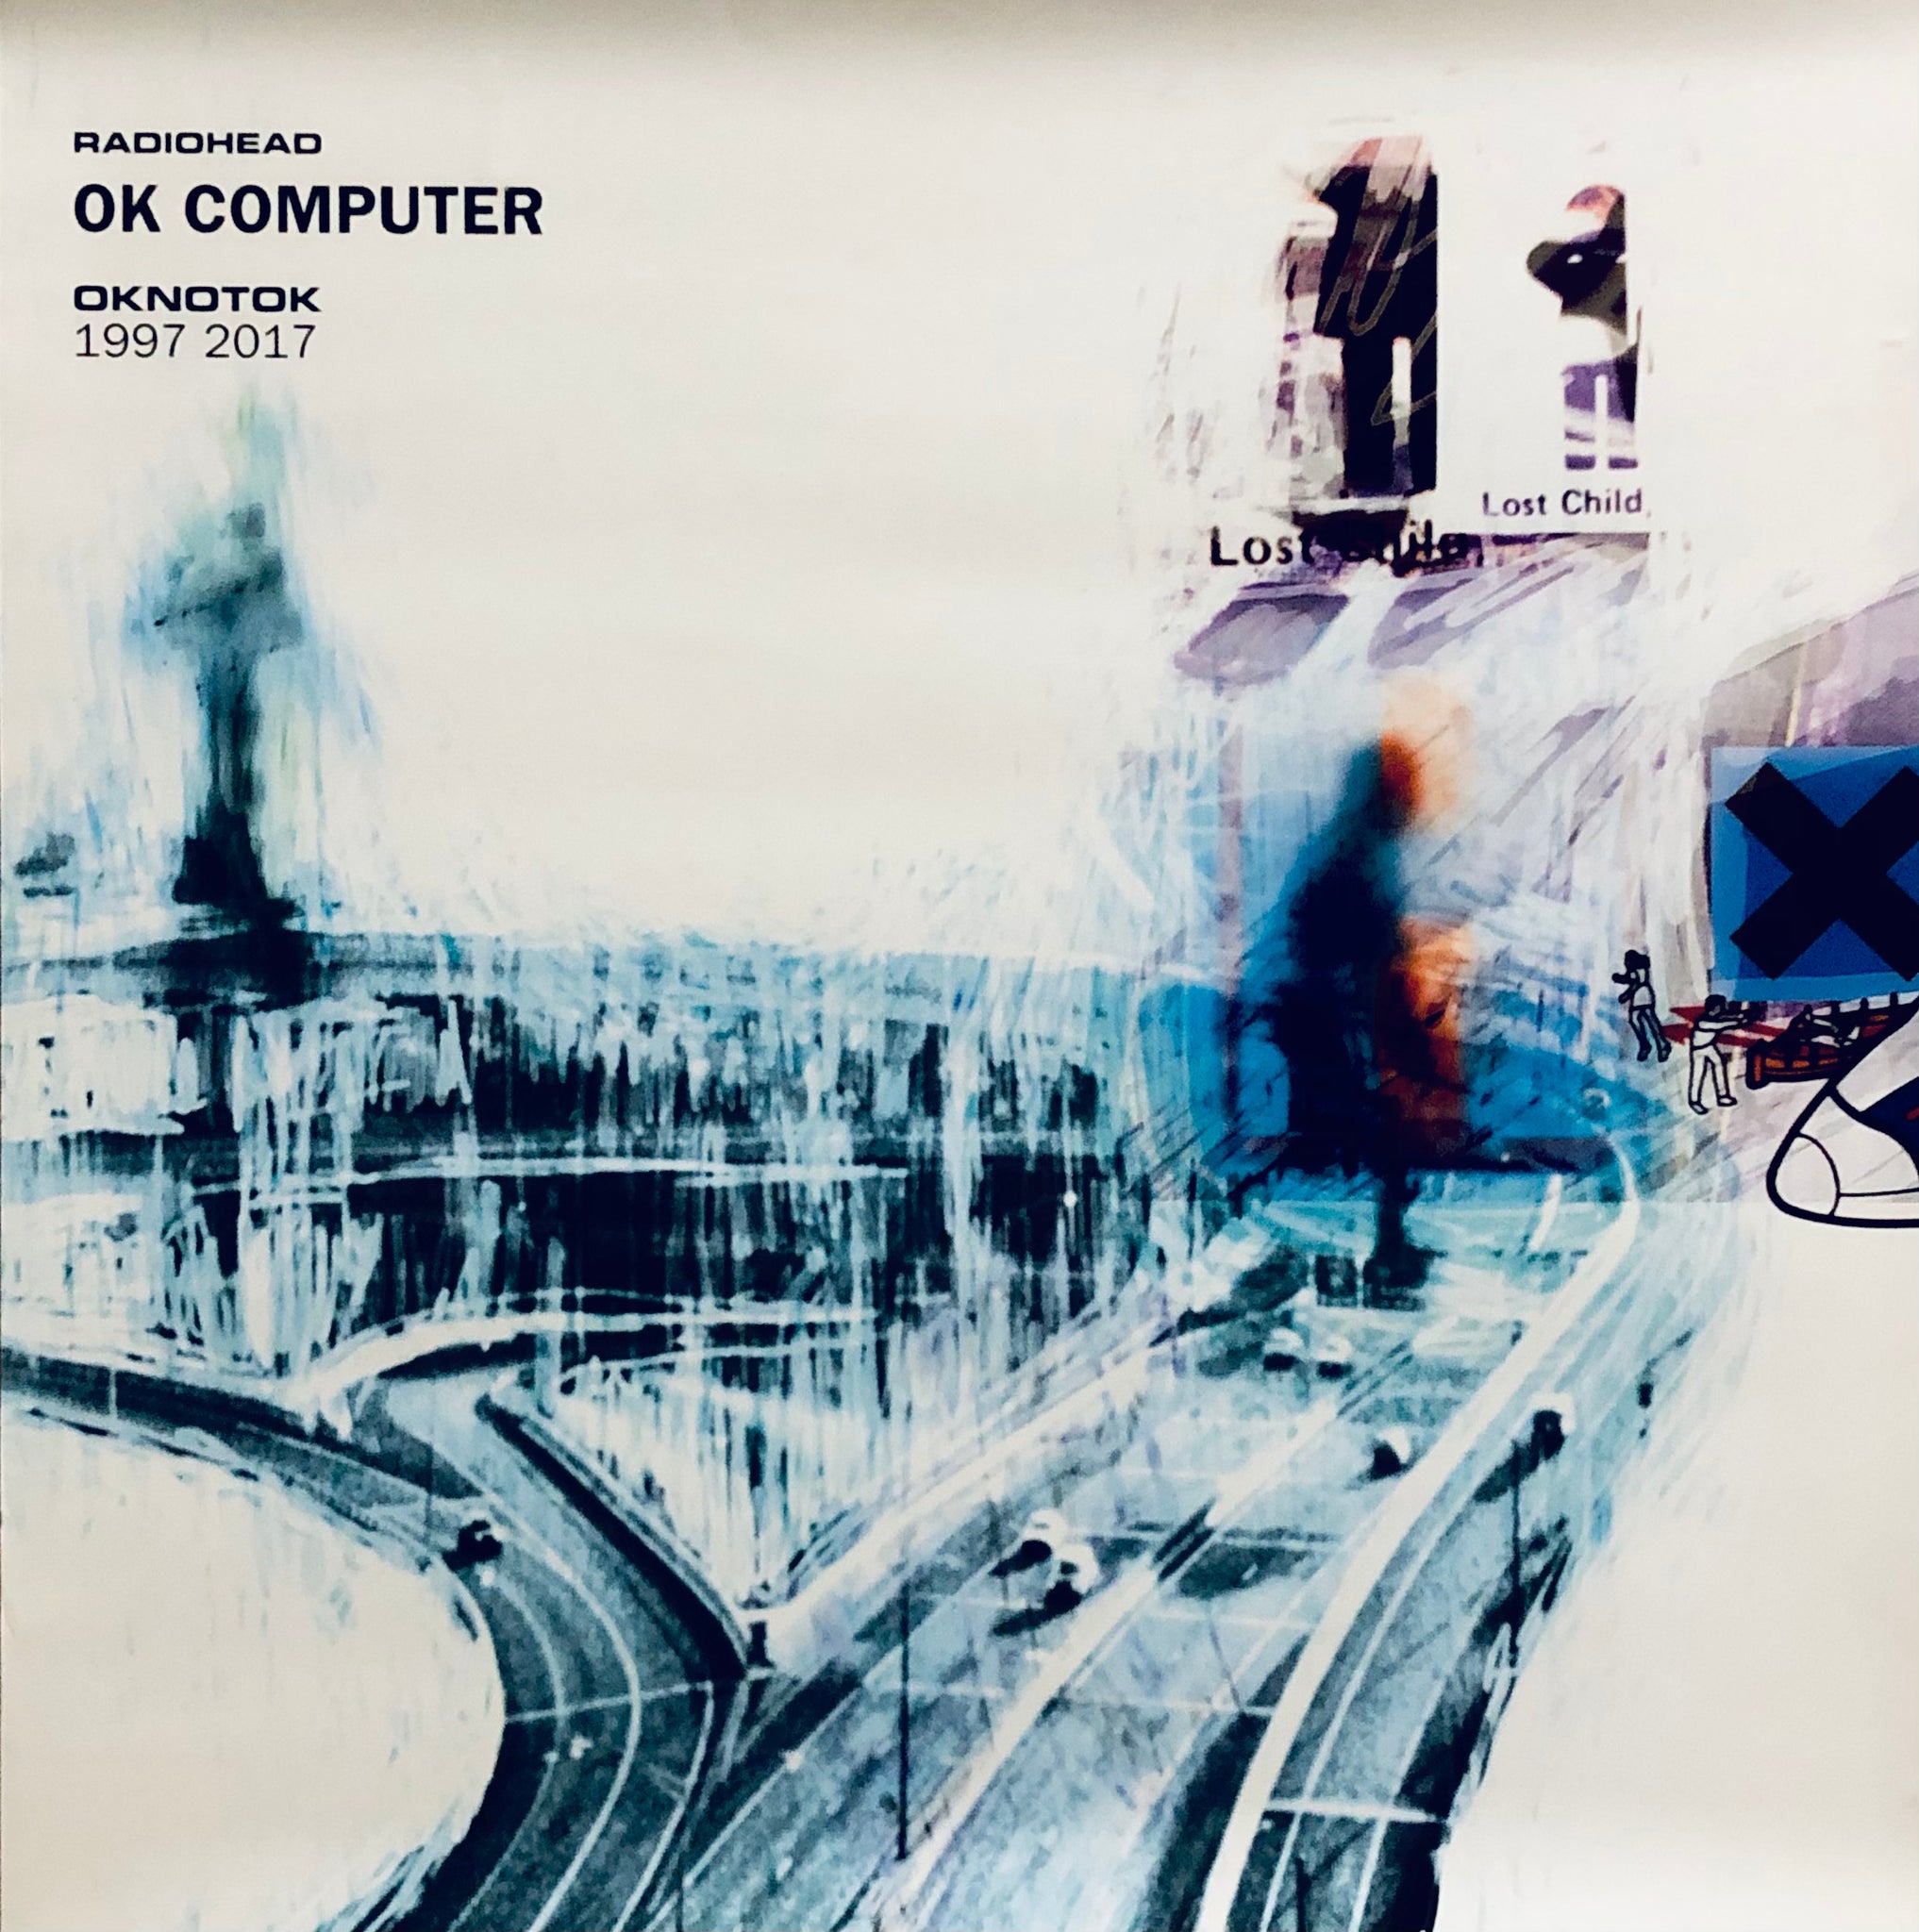 Radiohead - OK Computer OKNOTOK 1997 2017 - Double-sided Promo 